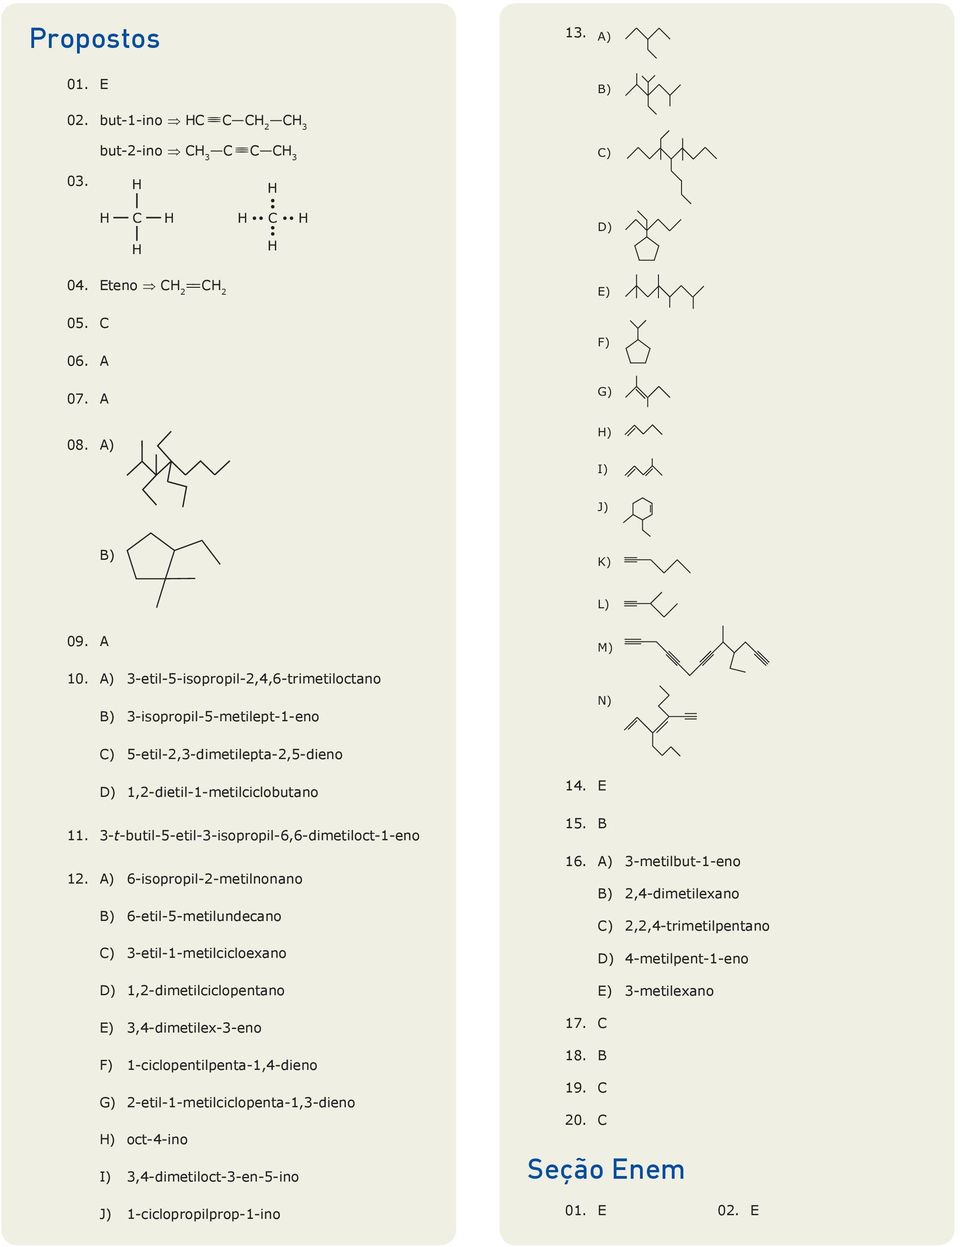 6-isopropil-2-metilnonano 6-etil-5-metilundecano ) 3-etil-1-metilcicloexano 1,2-dimetilciclopentano E) 3,4-dimetilex-3-eno F) 1-ciclopentilpenta-1,4-dieno G)